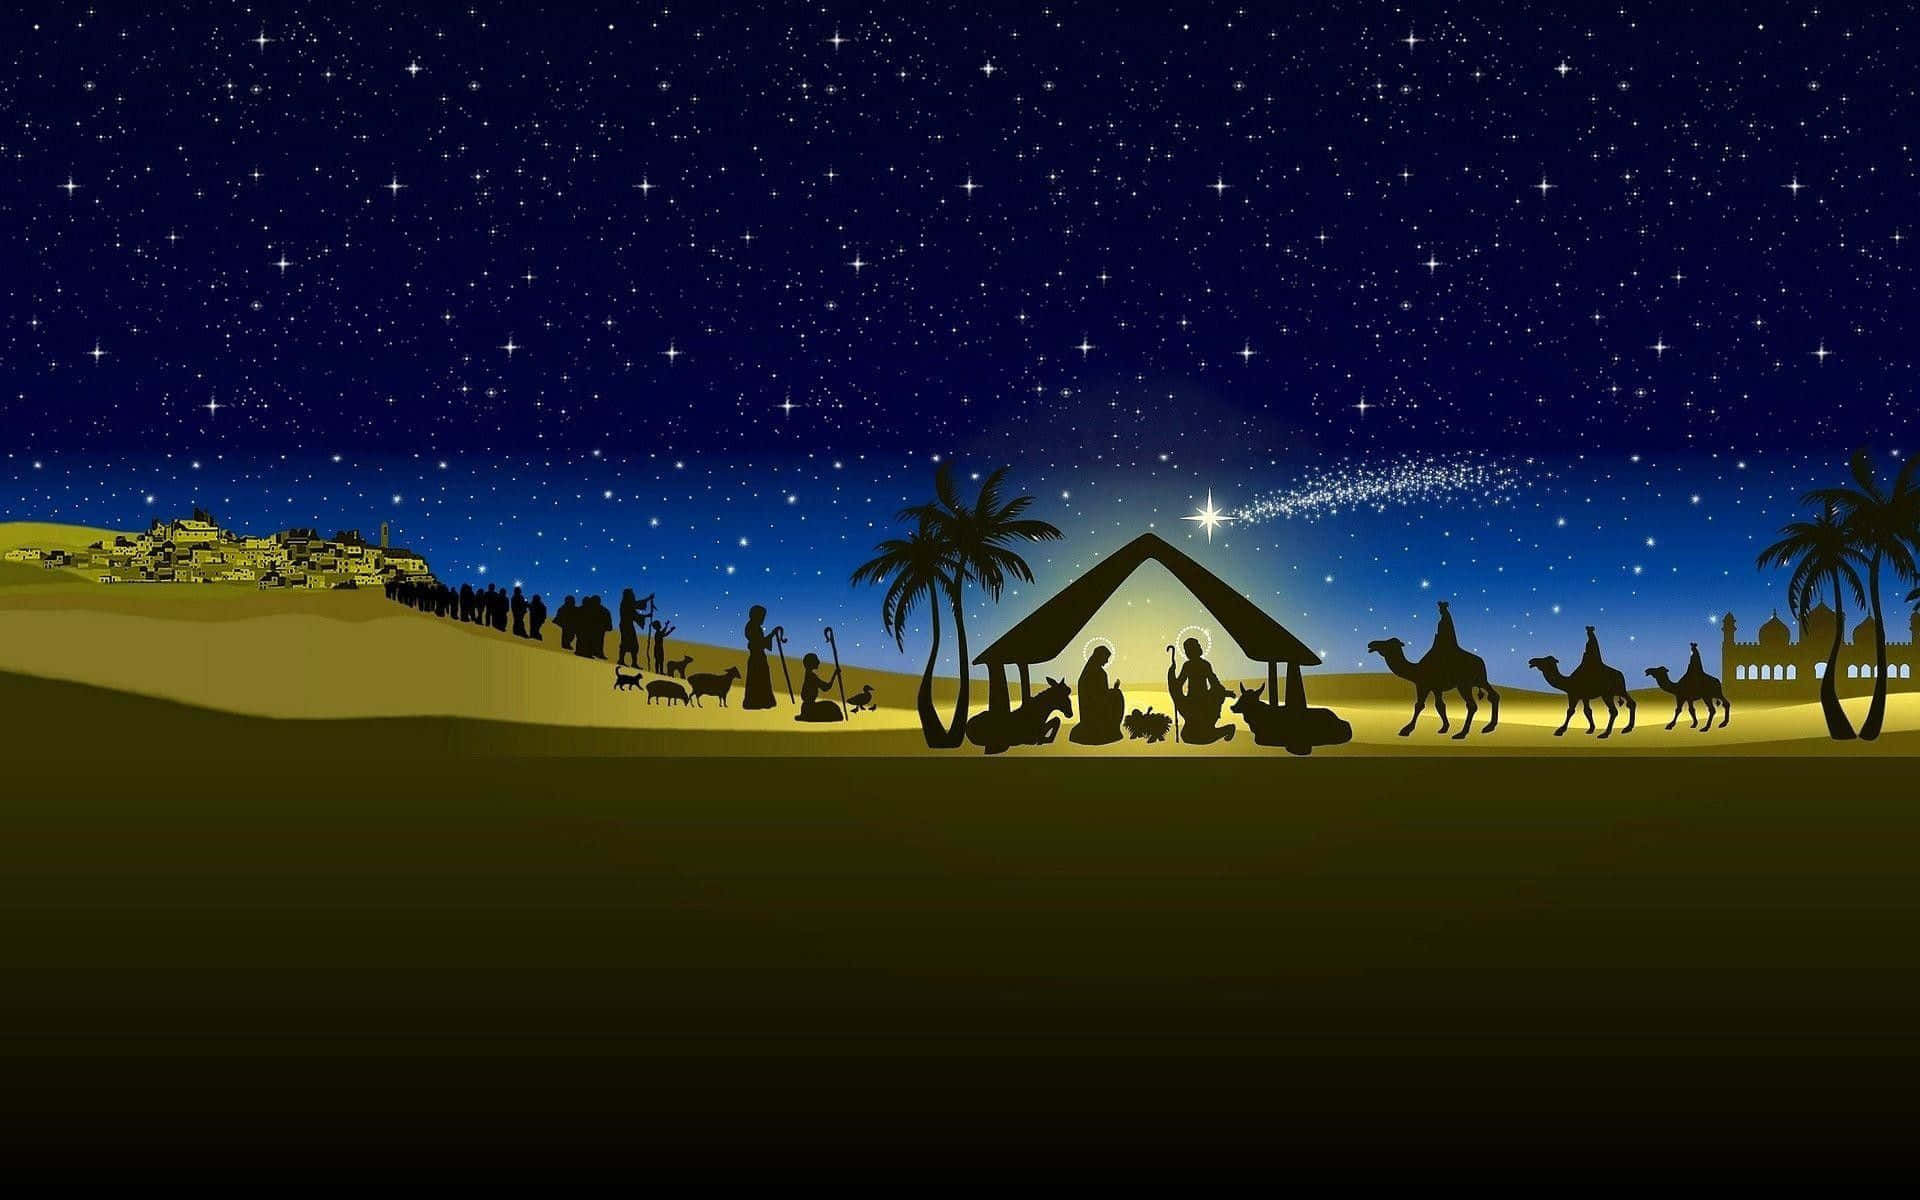 Joyous Christmas season with a classic Nativity Scene